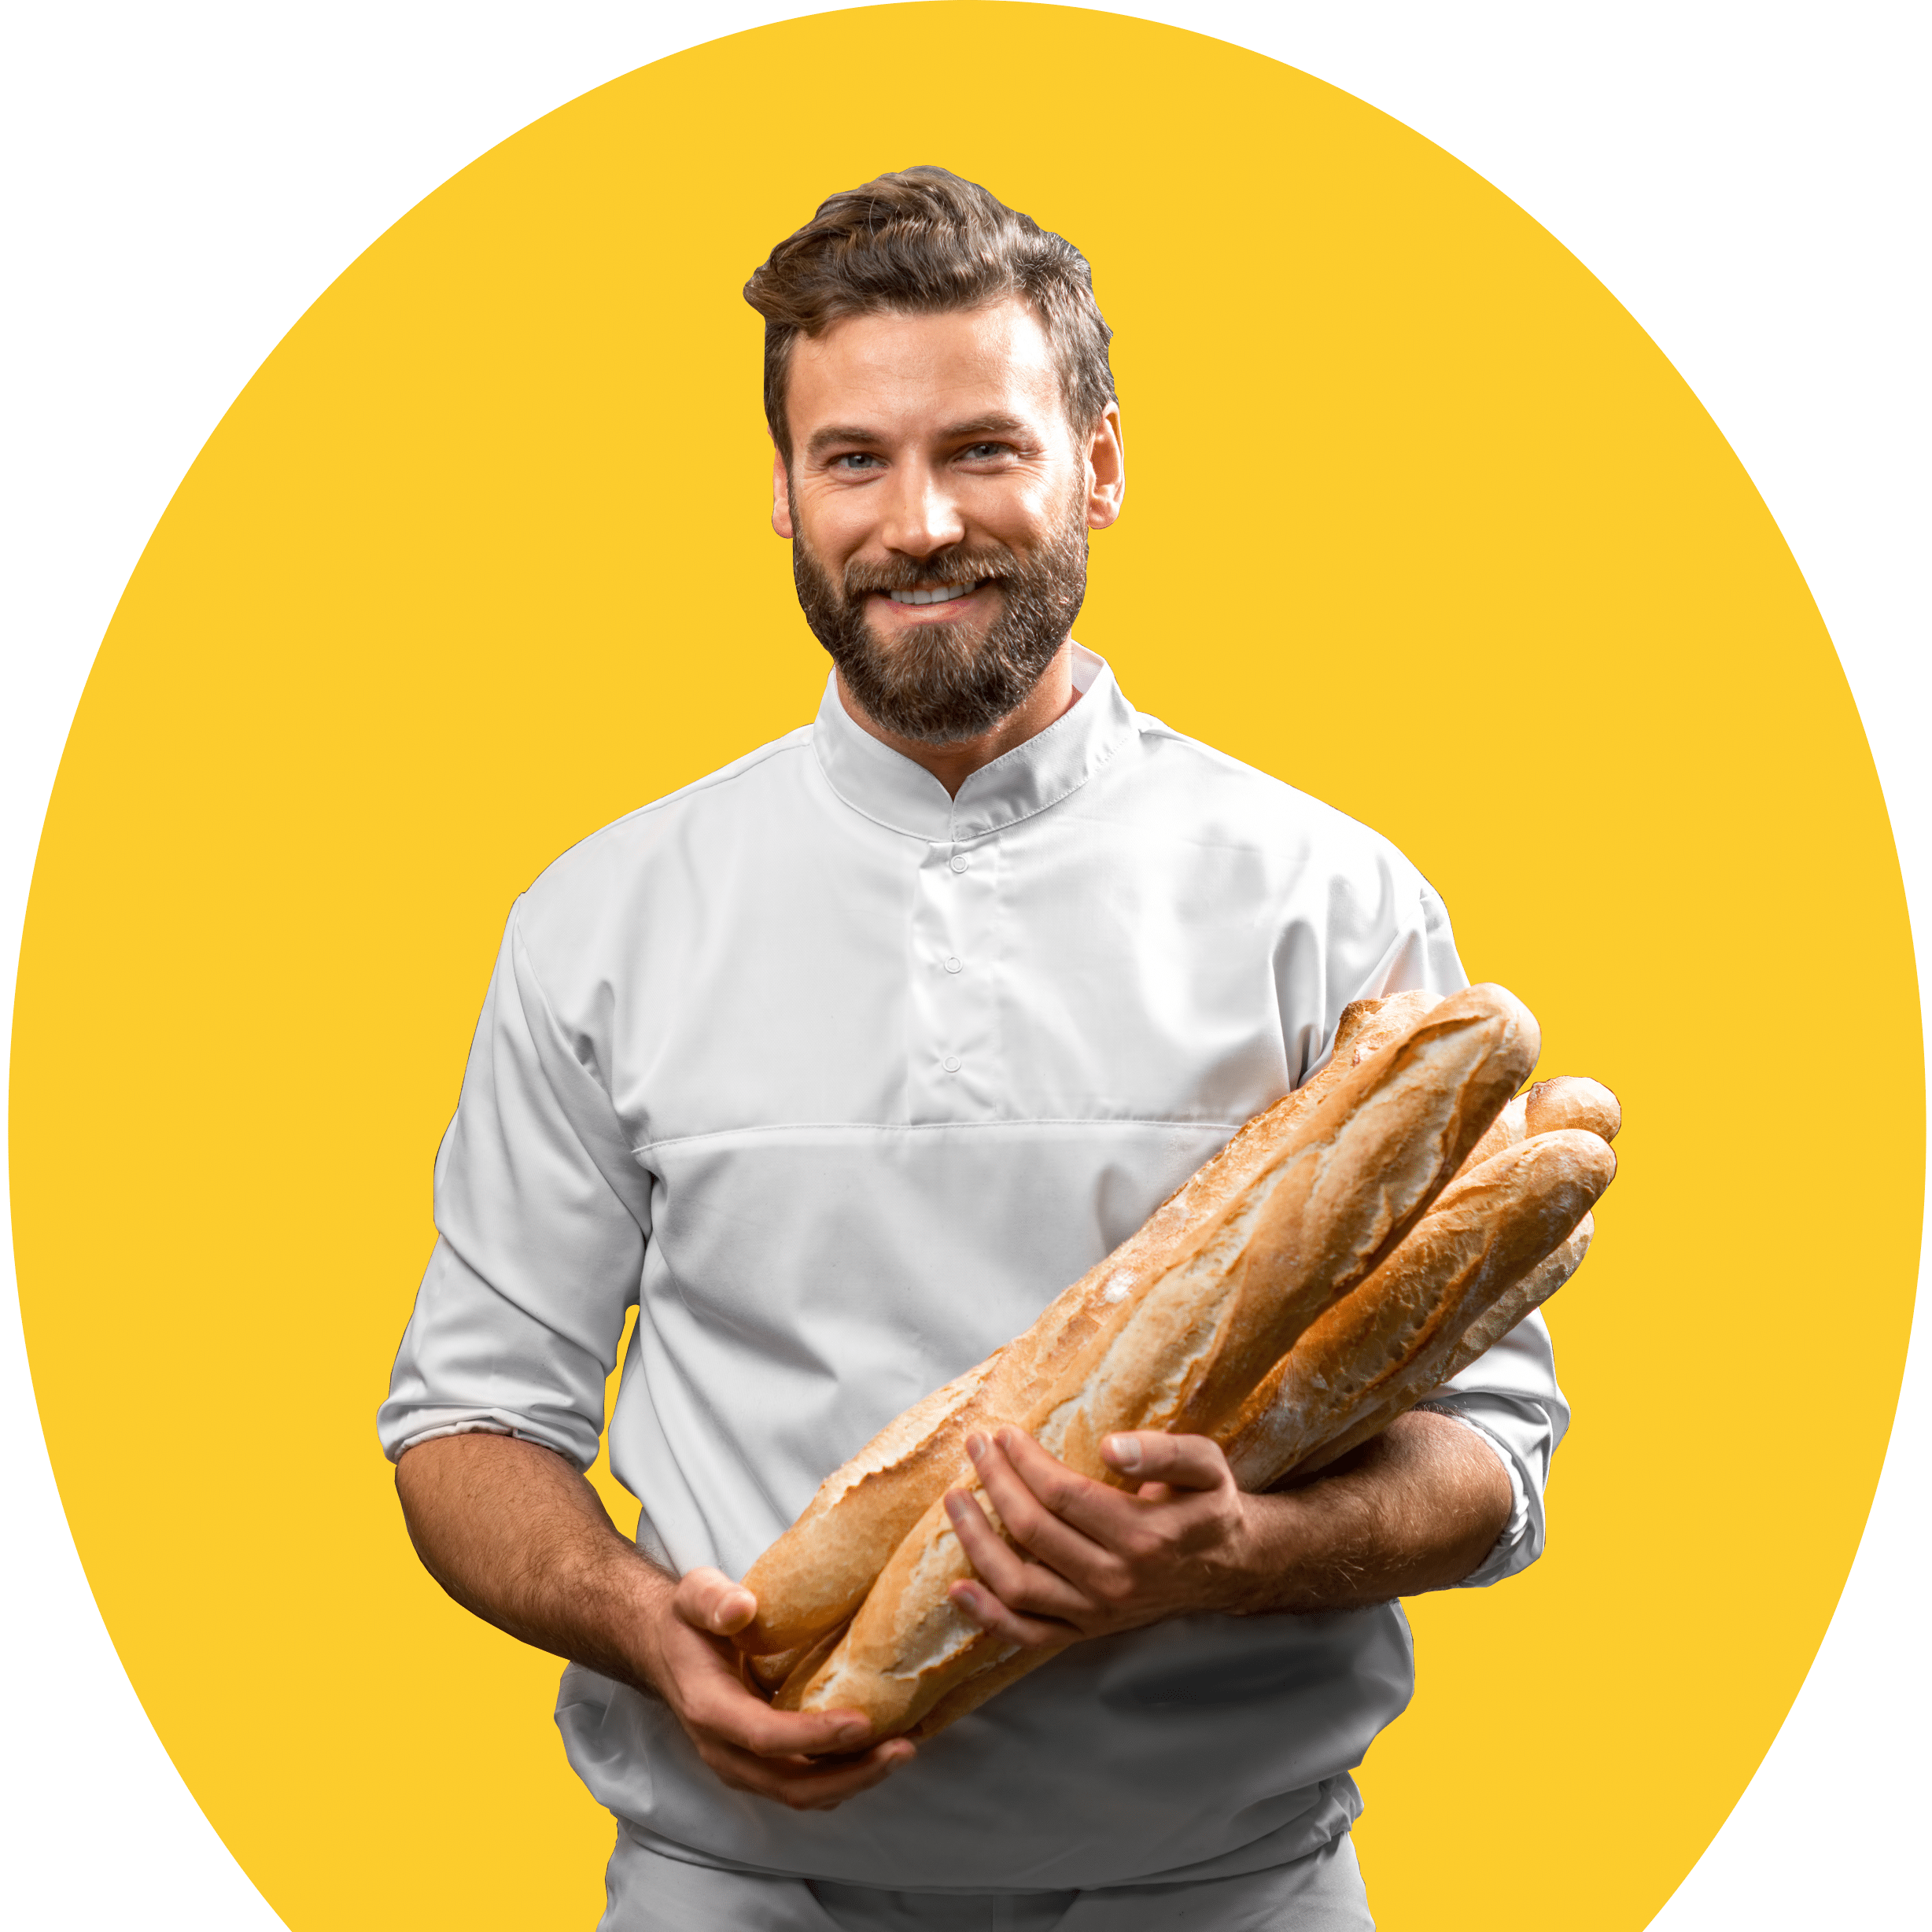 Industrial bakery as a customer for Fleggs